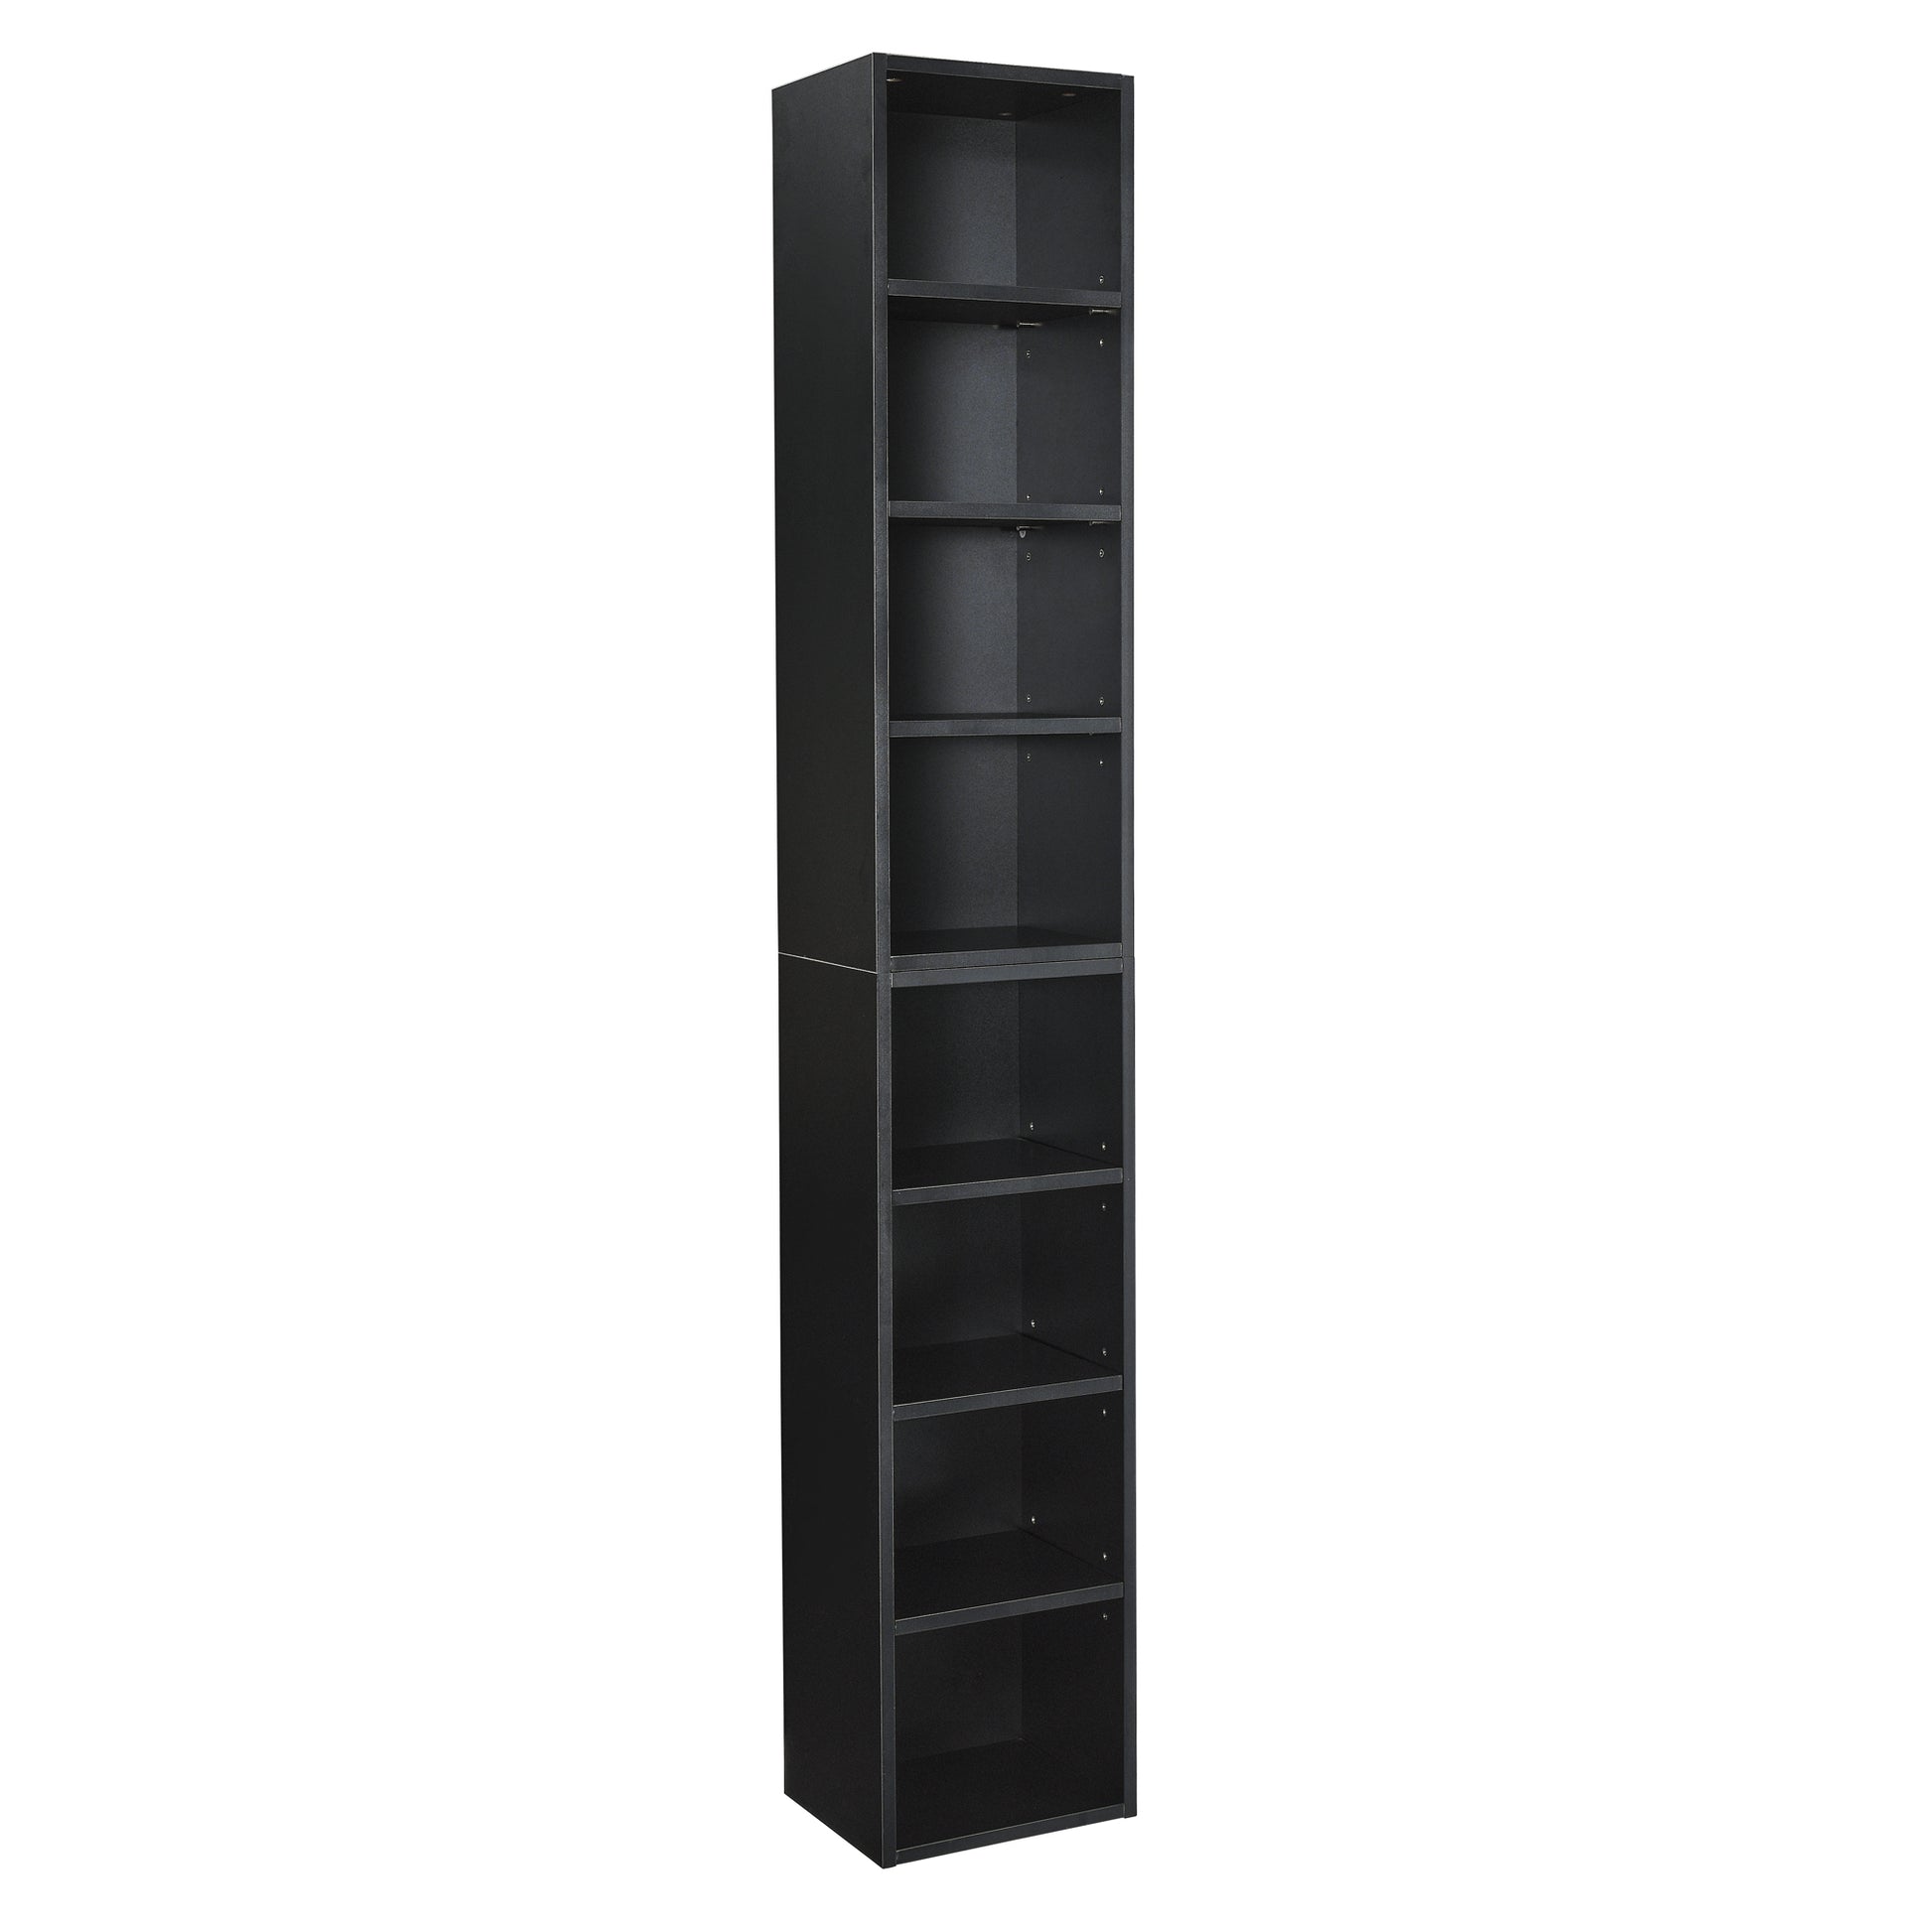 Slim Storage Cabinet with Adjustable Shelves for Home Office